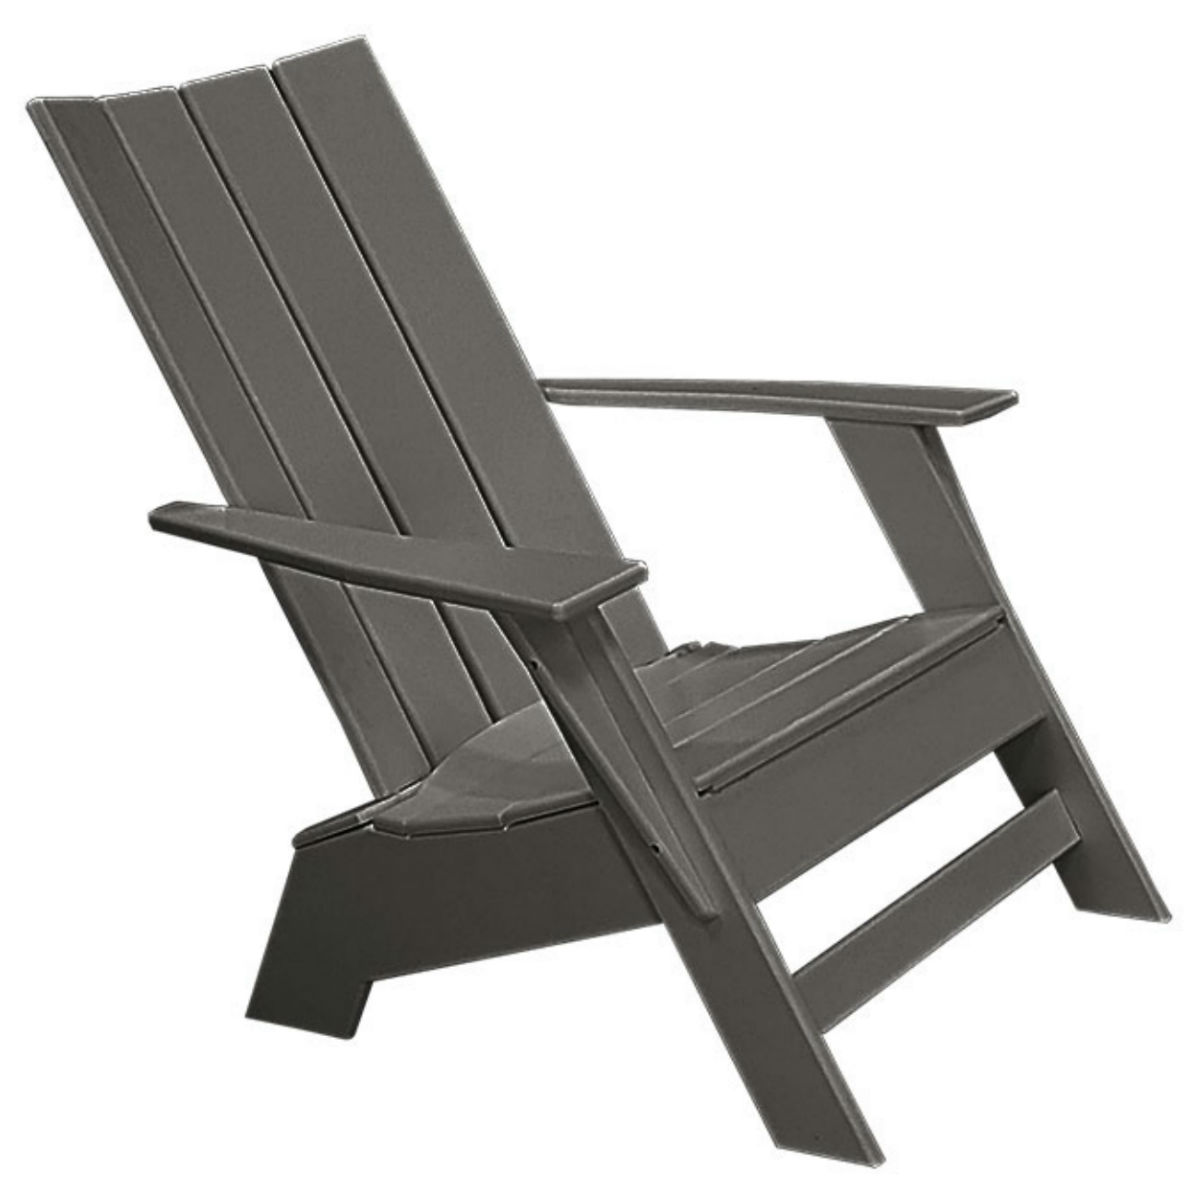 Modern Muskoka Chair Recycled Patio, Plastic Wood Adirondack Chairs Canada